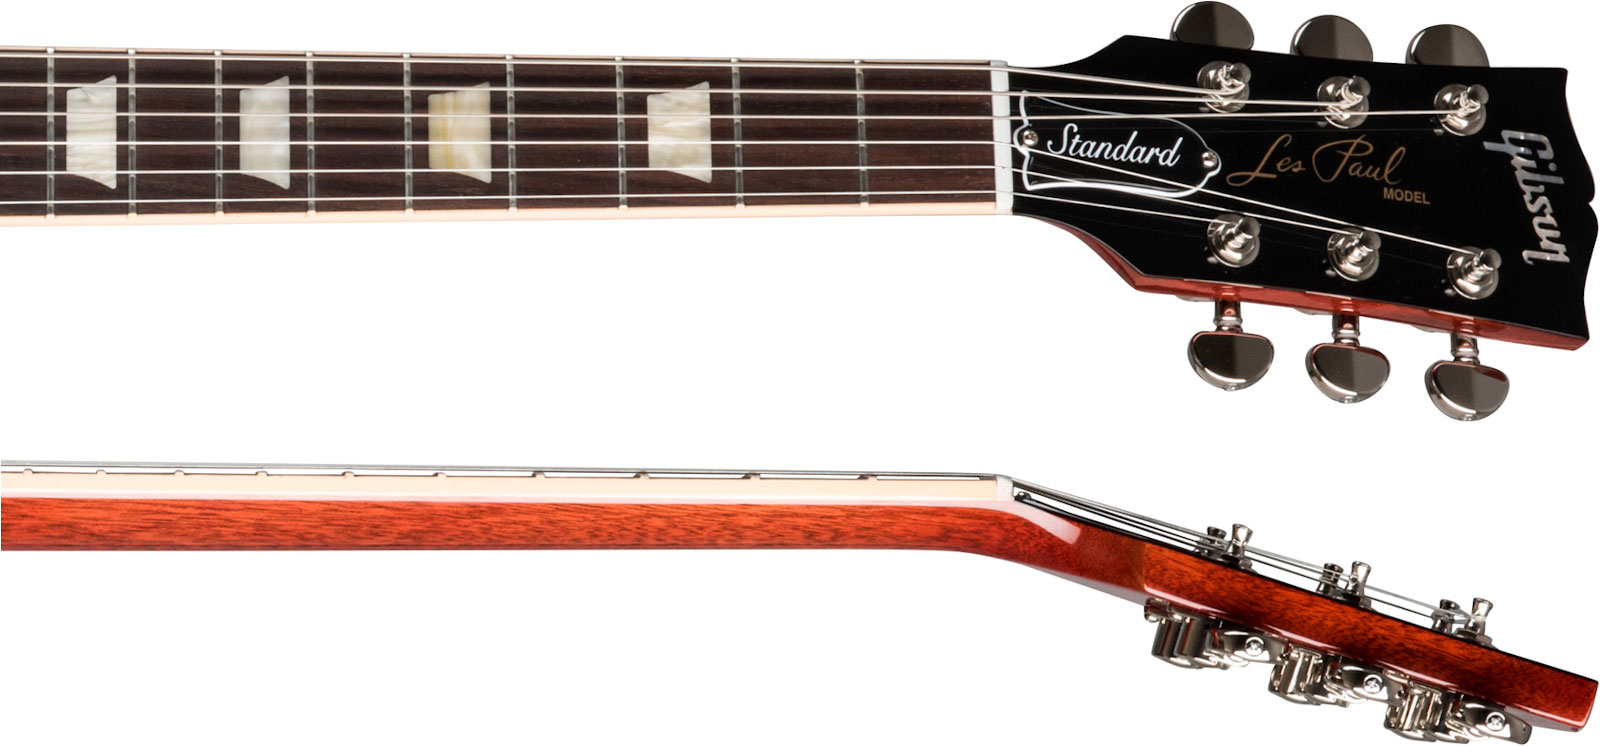 Gibson Les Paul Standard 60s 2h Ht Rw - Iced Tea - Single cut electric guitar - Variation 3